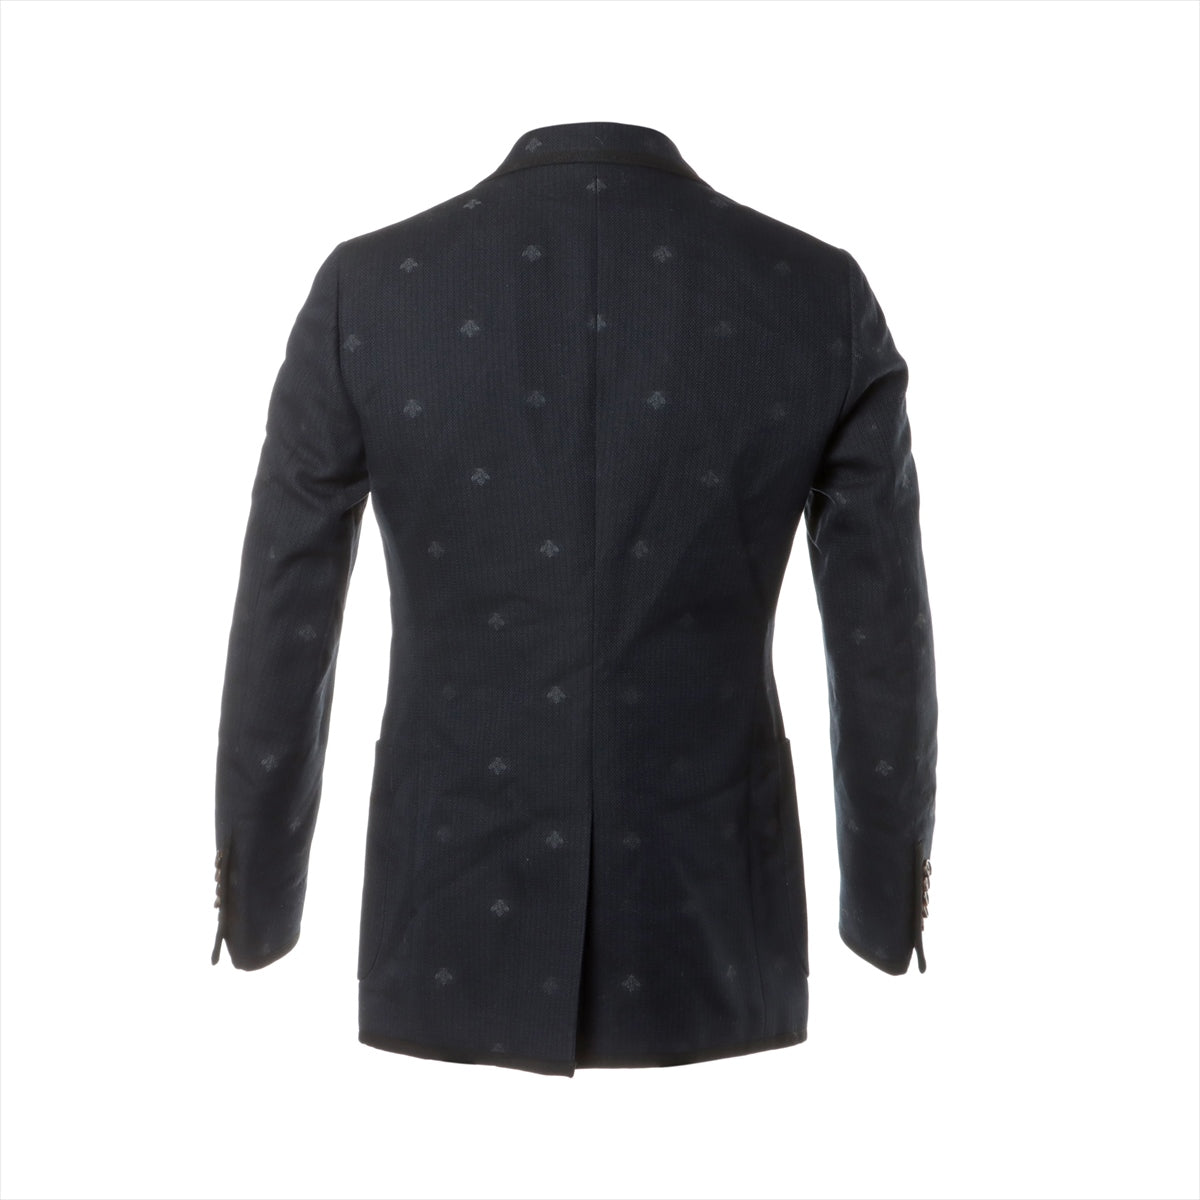 Gucci 18 years Cotton & wool Tailored jacket 44 Men's Navy blue  521888 Monaco Bee Stripe